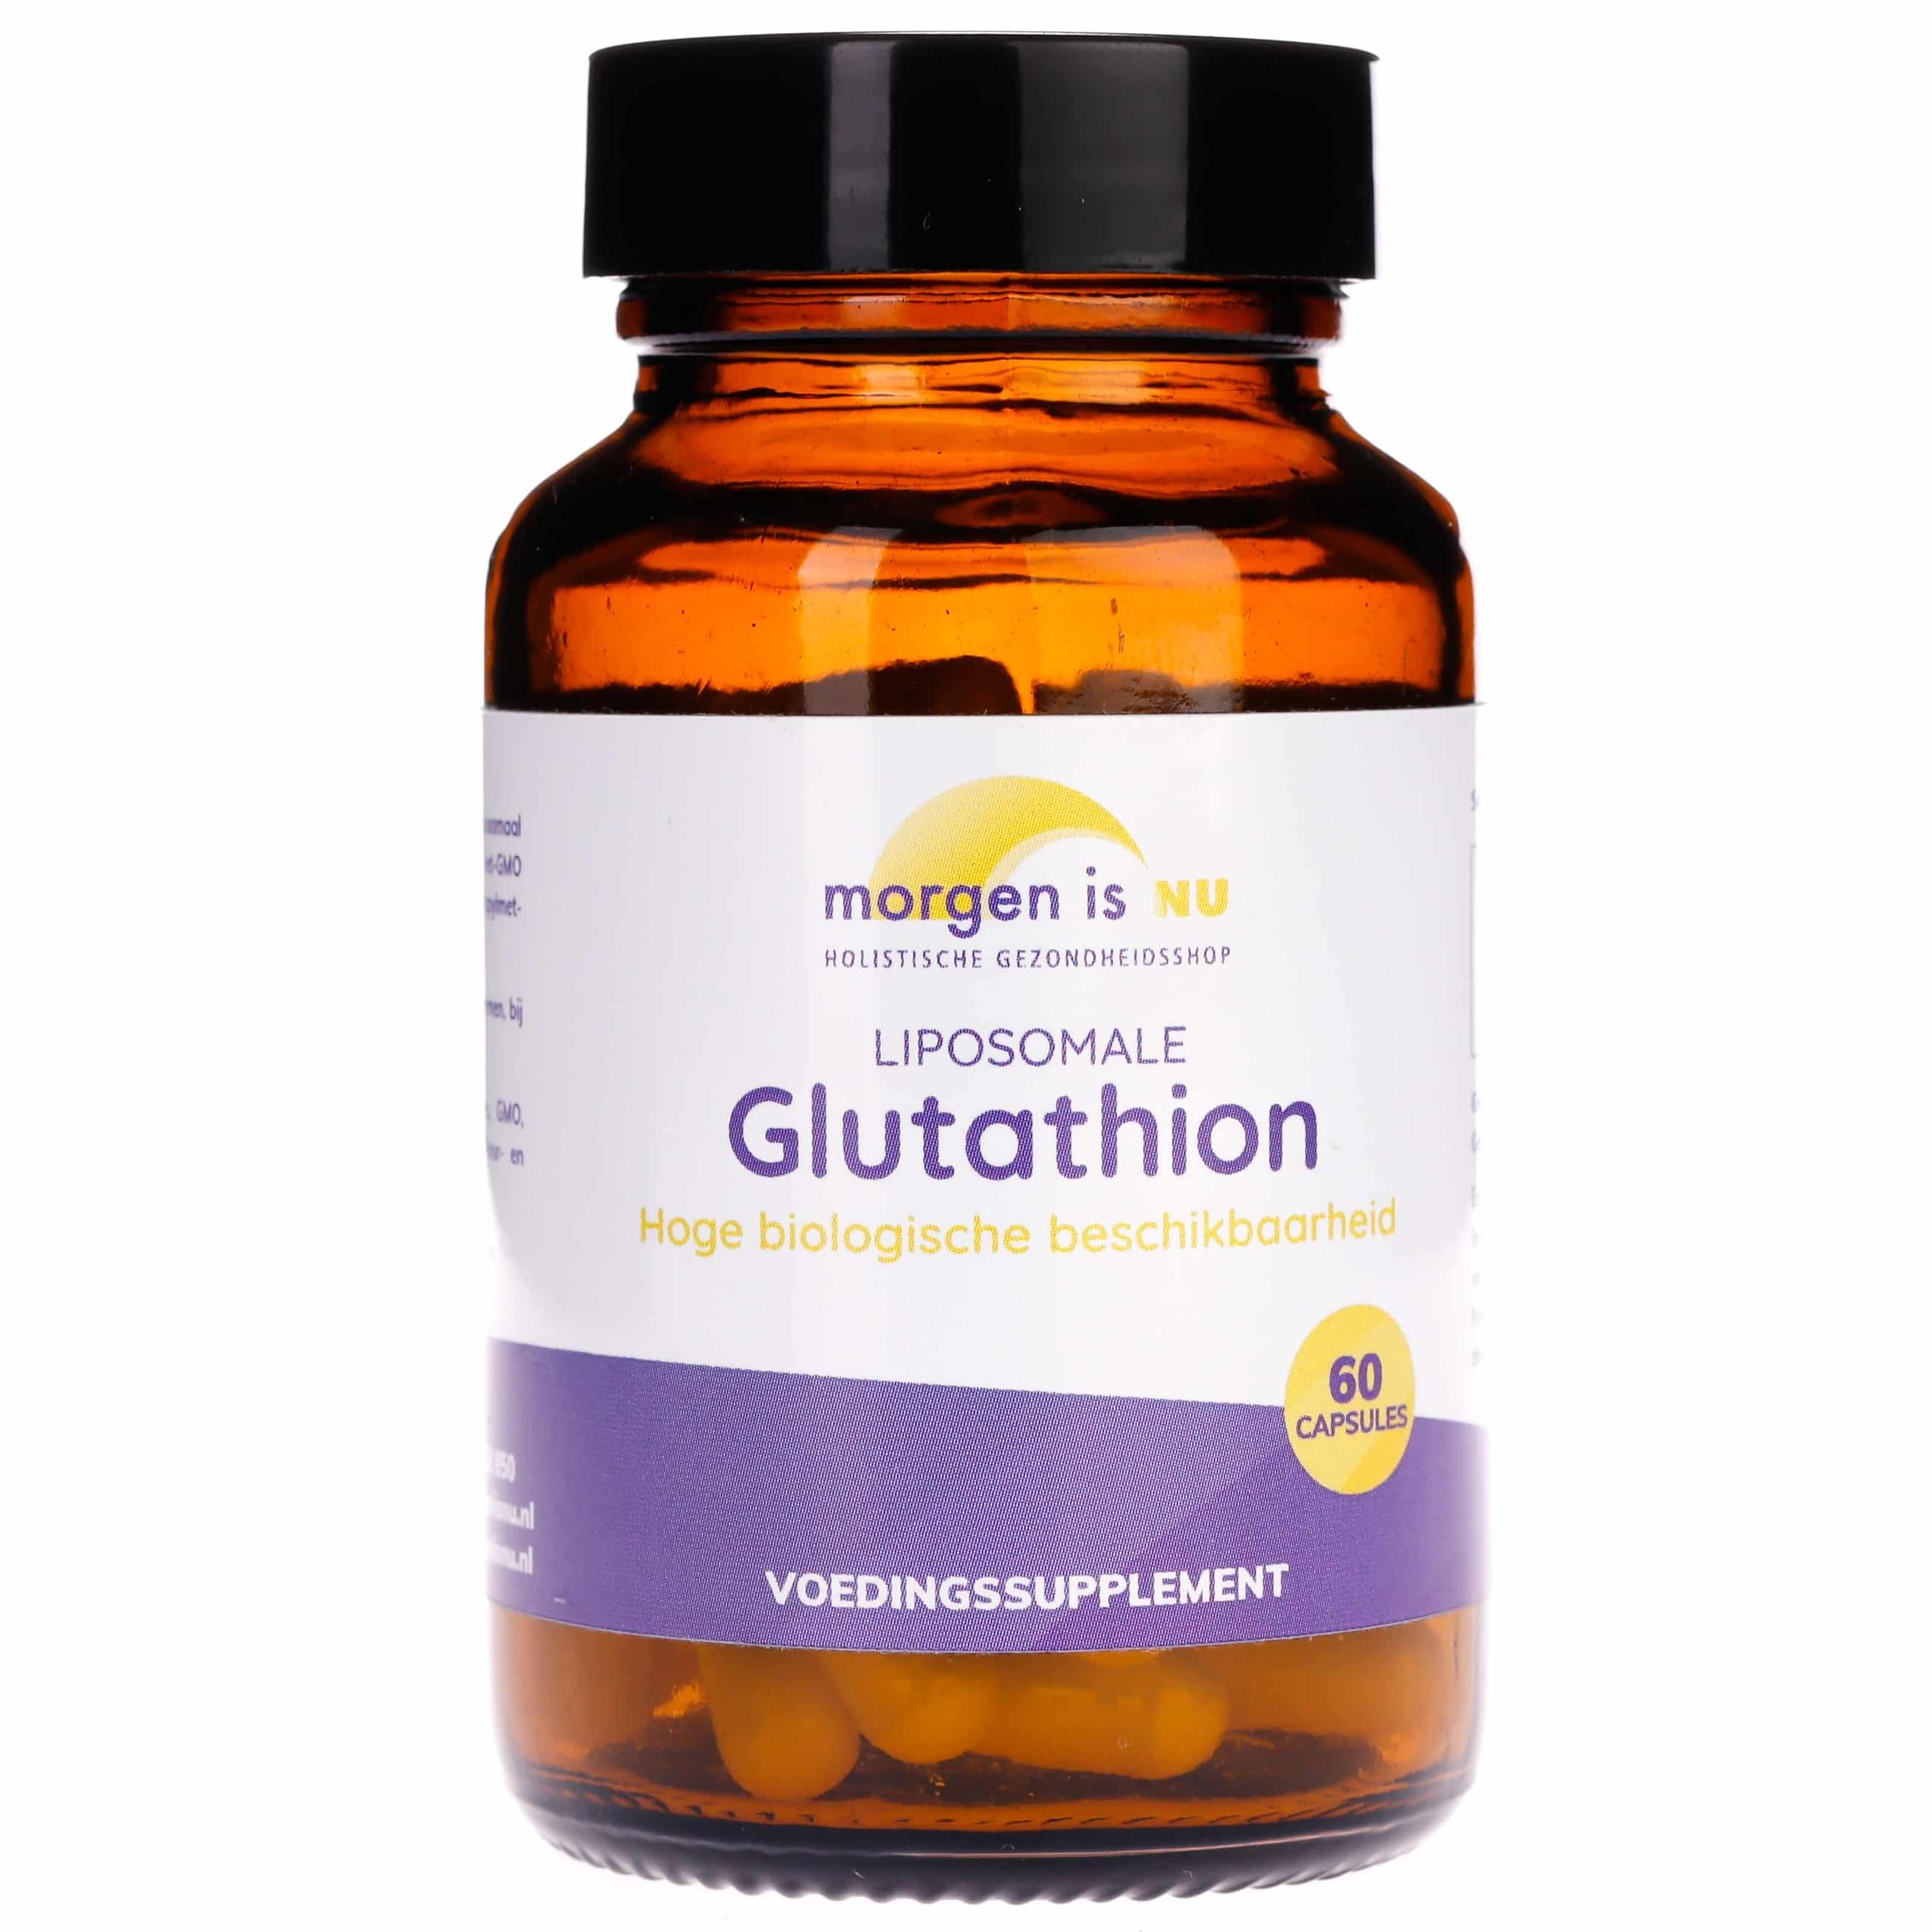 Liposomale Glutathion – Morgen is Nu